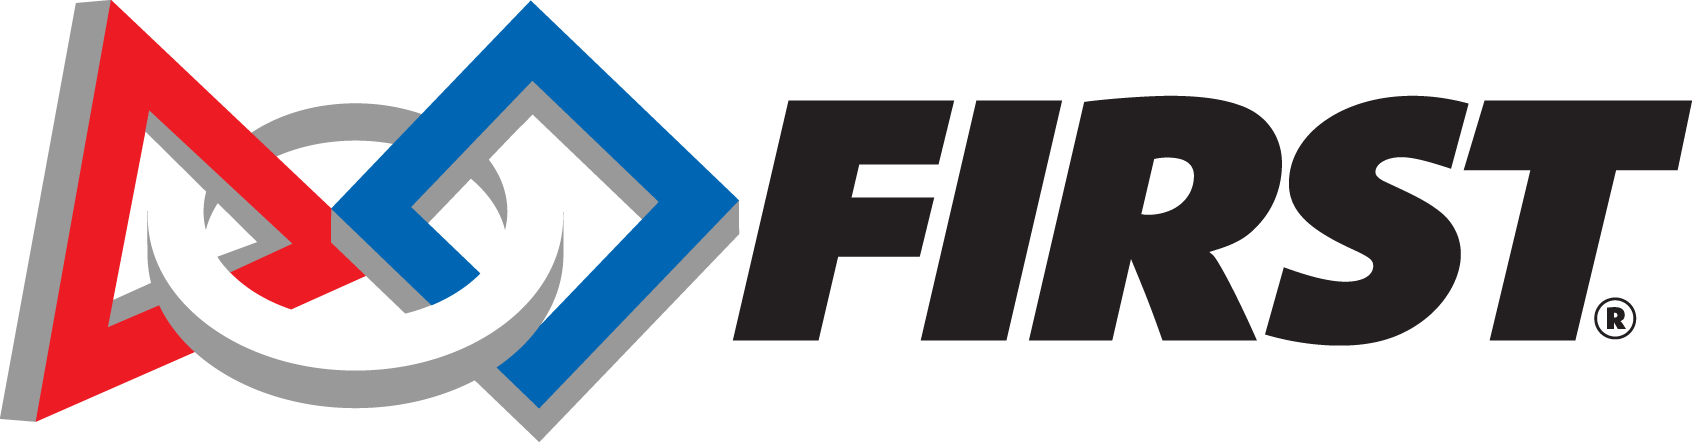 Missouri FTC Champioinships logo